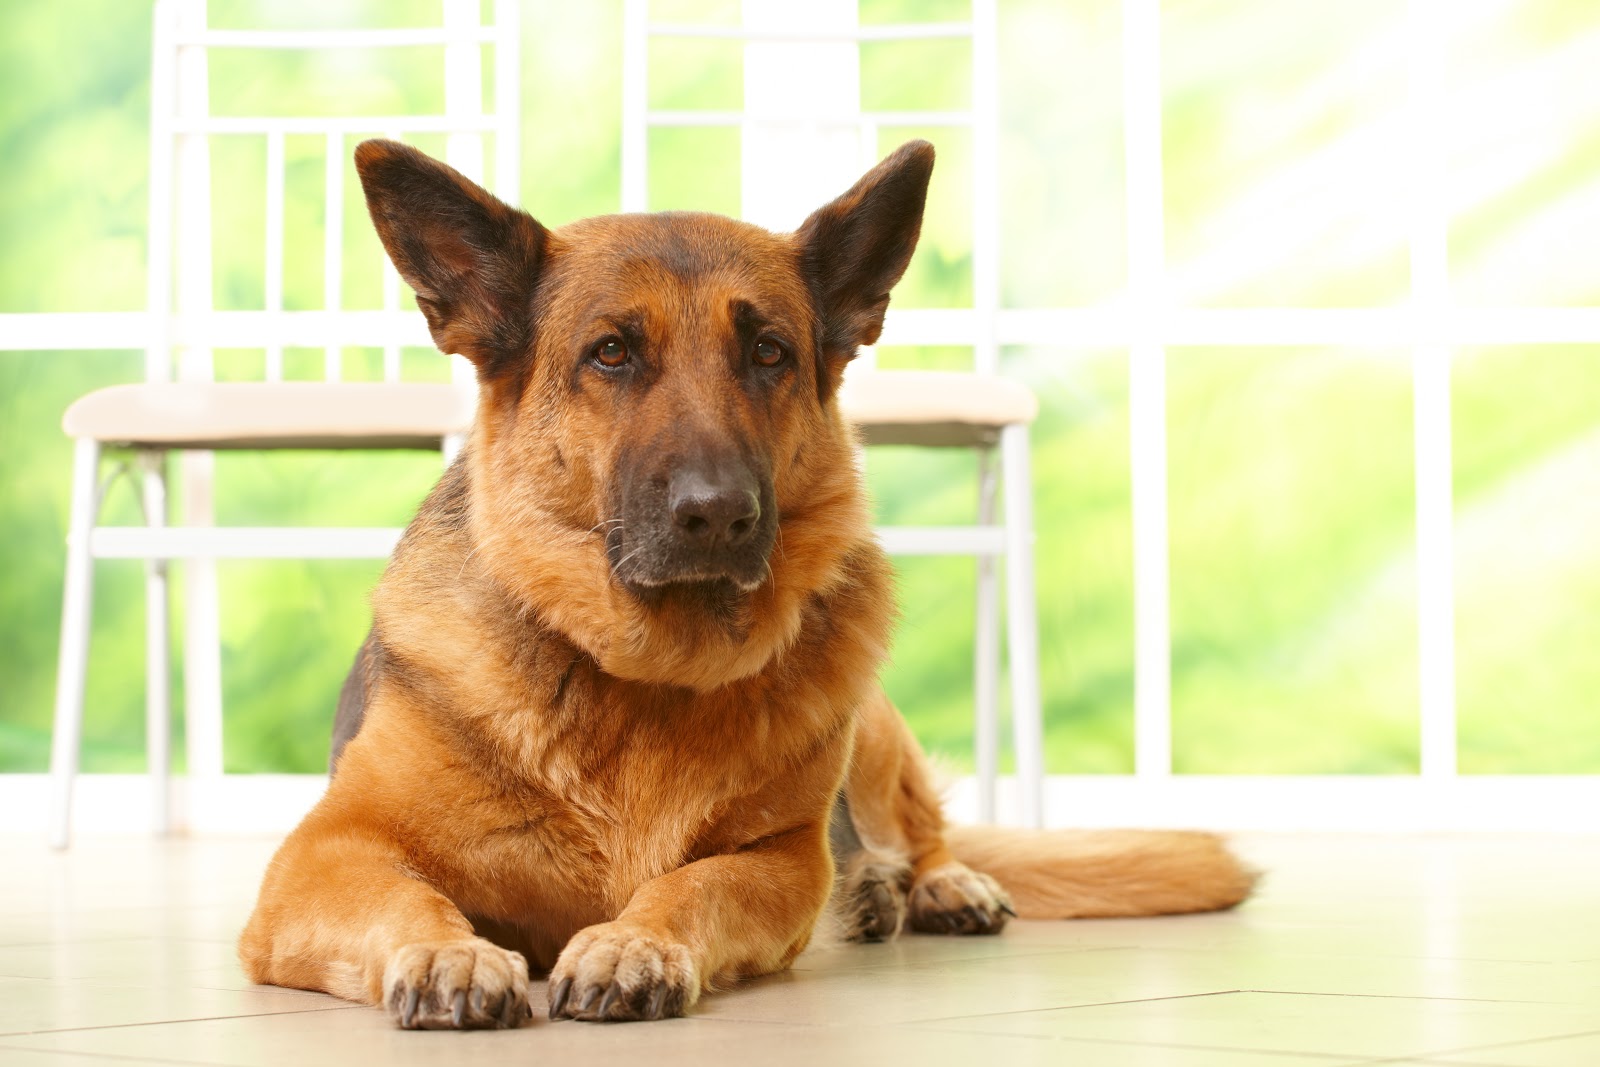 Guard Dog or Home Alarm